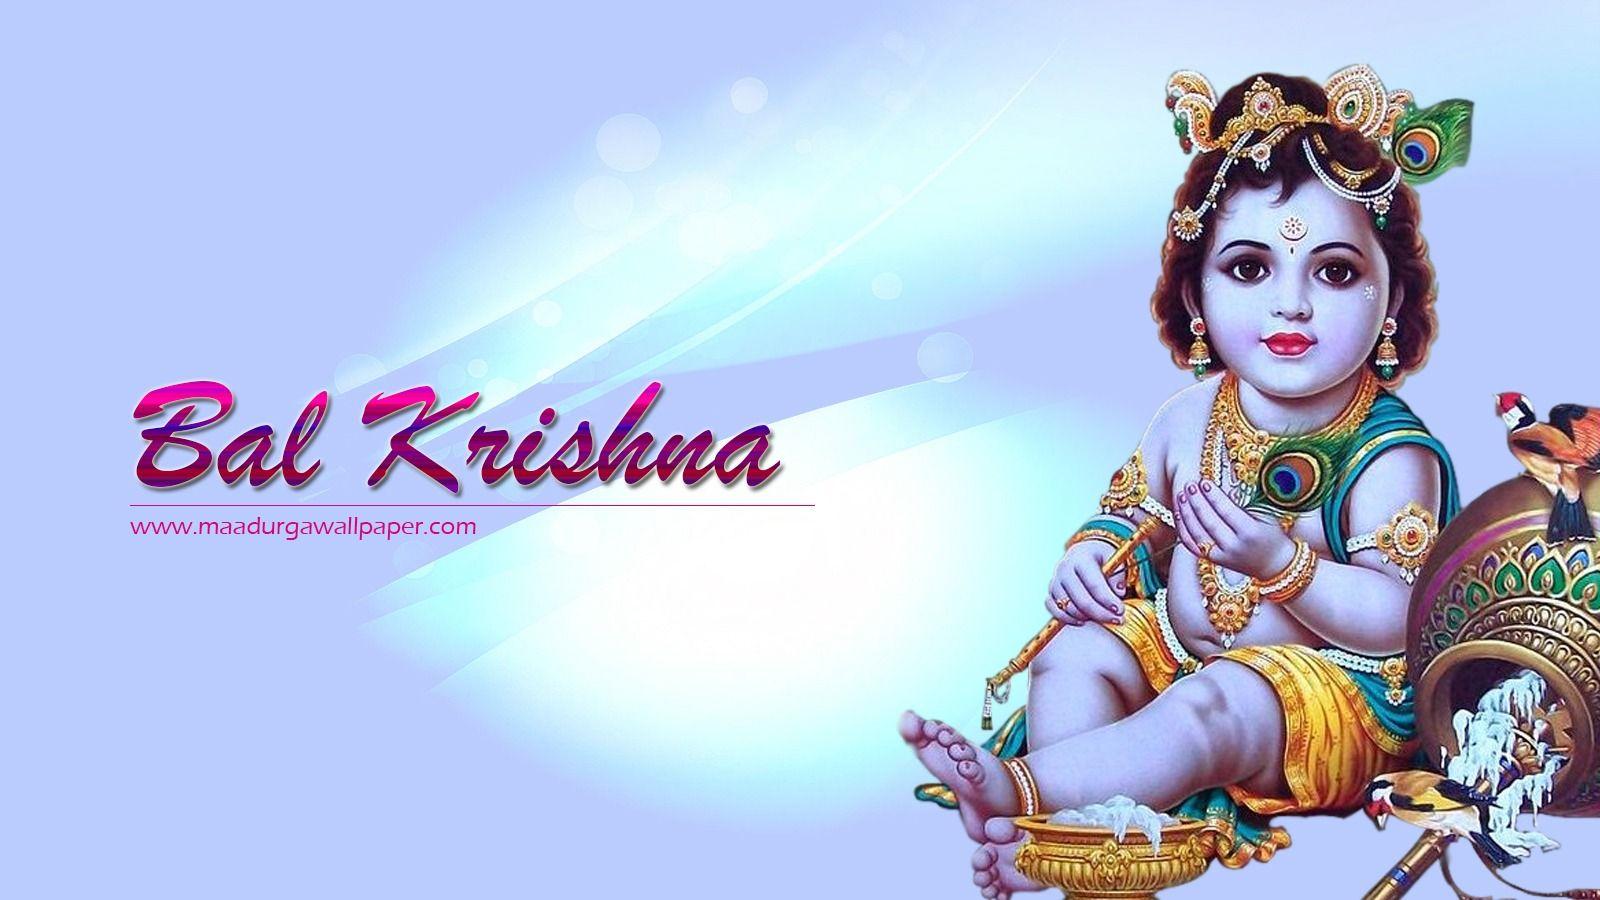 Bal Krishna Wallpaper Free Download For Mobile